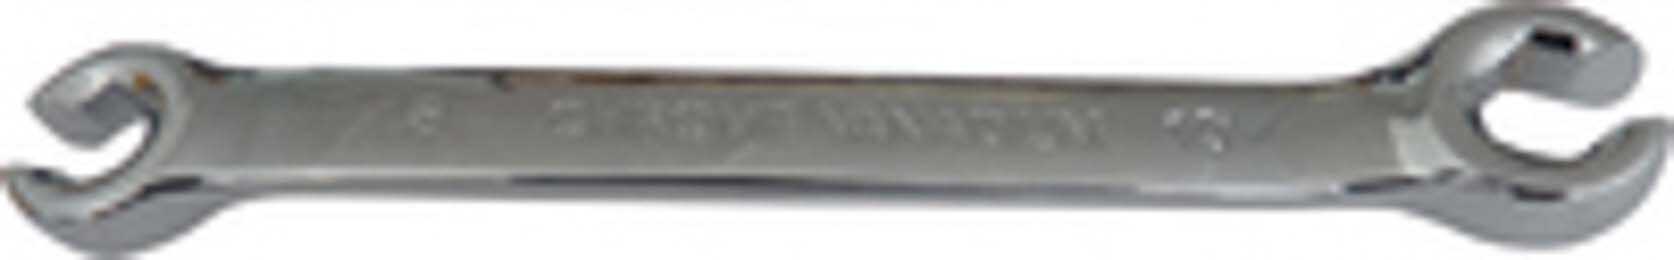 Couteau inox n°8 ' ' s/carte OPINEL - 17671